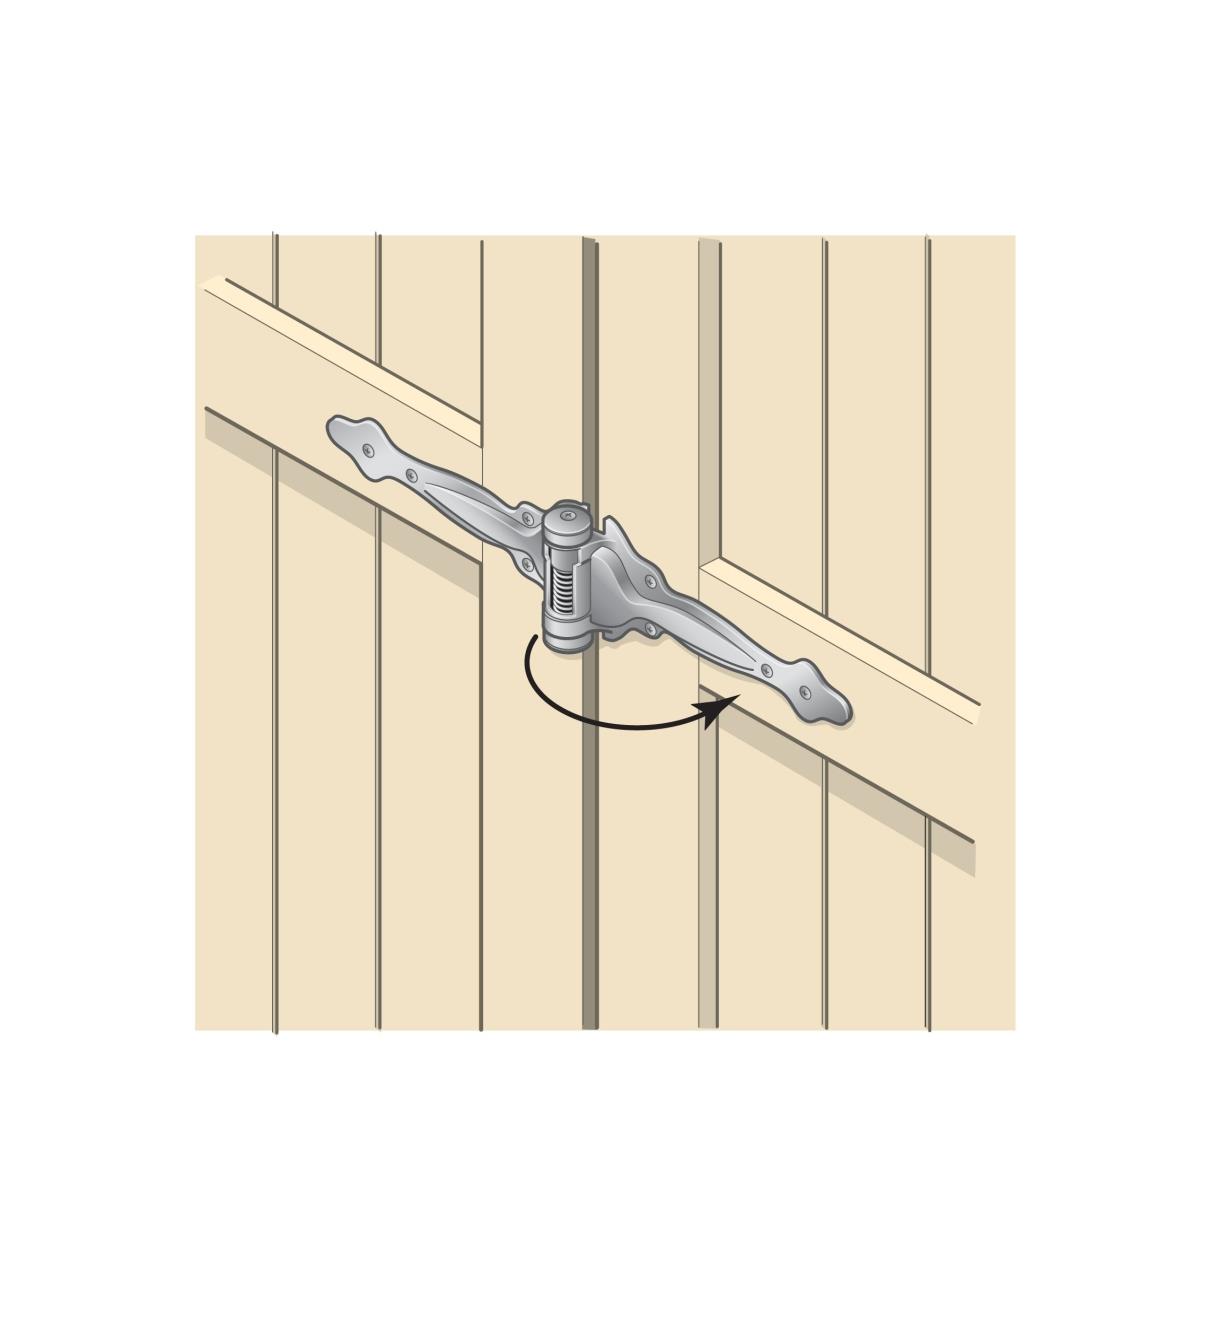 Illustration of 16" Strap Hinge mounted on a gate